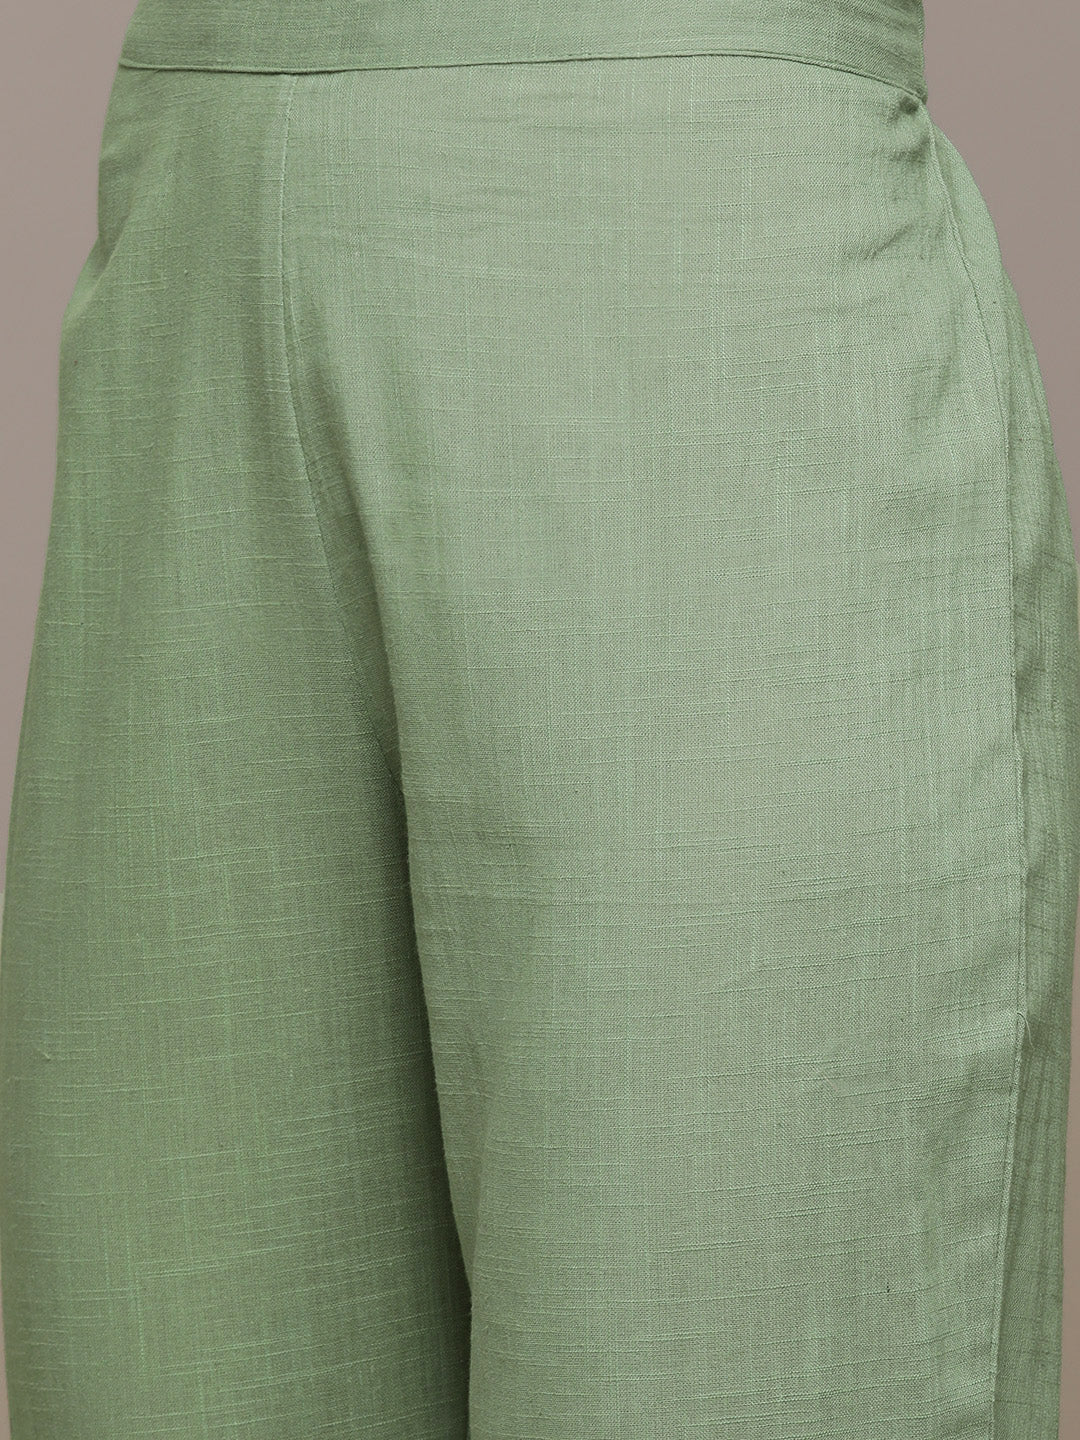 Ishin Women's Green Embroidered A-Line Kurta with Trouser & Dupatta